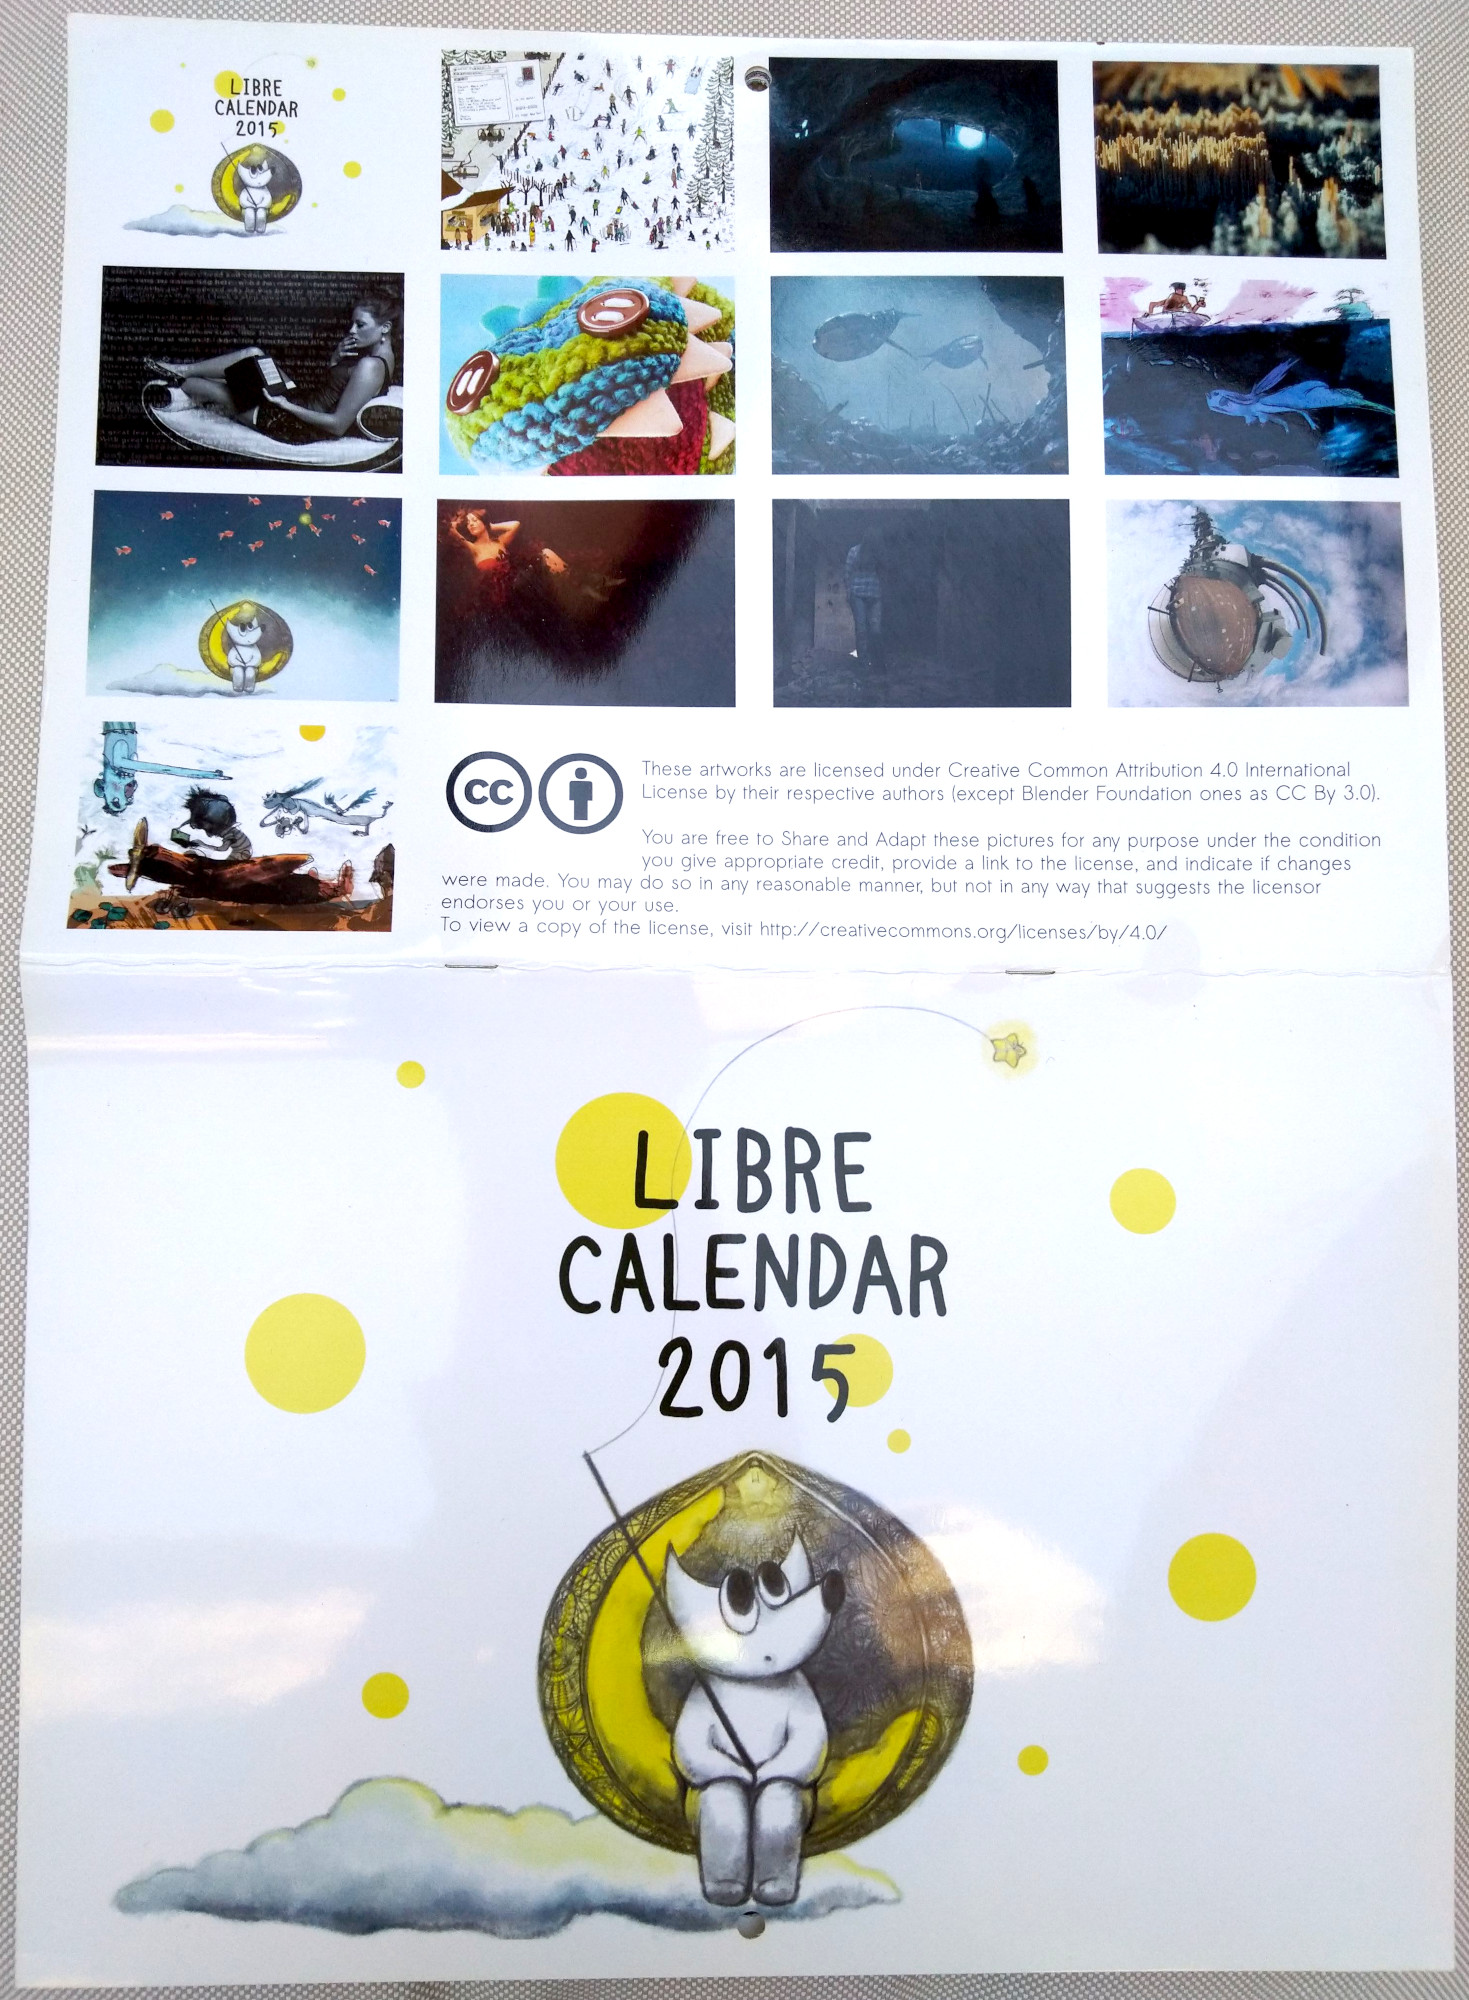 Libre Calendar 2015, physical print project by LILA non-profit